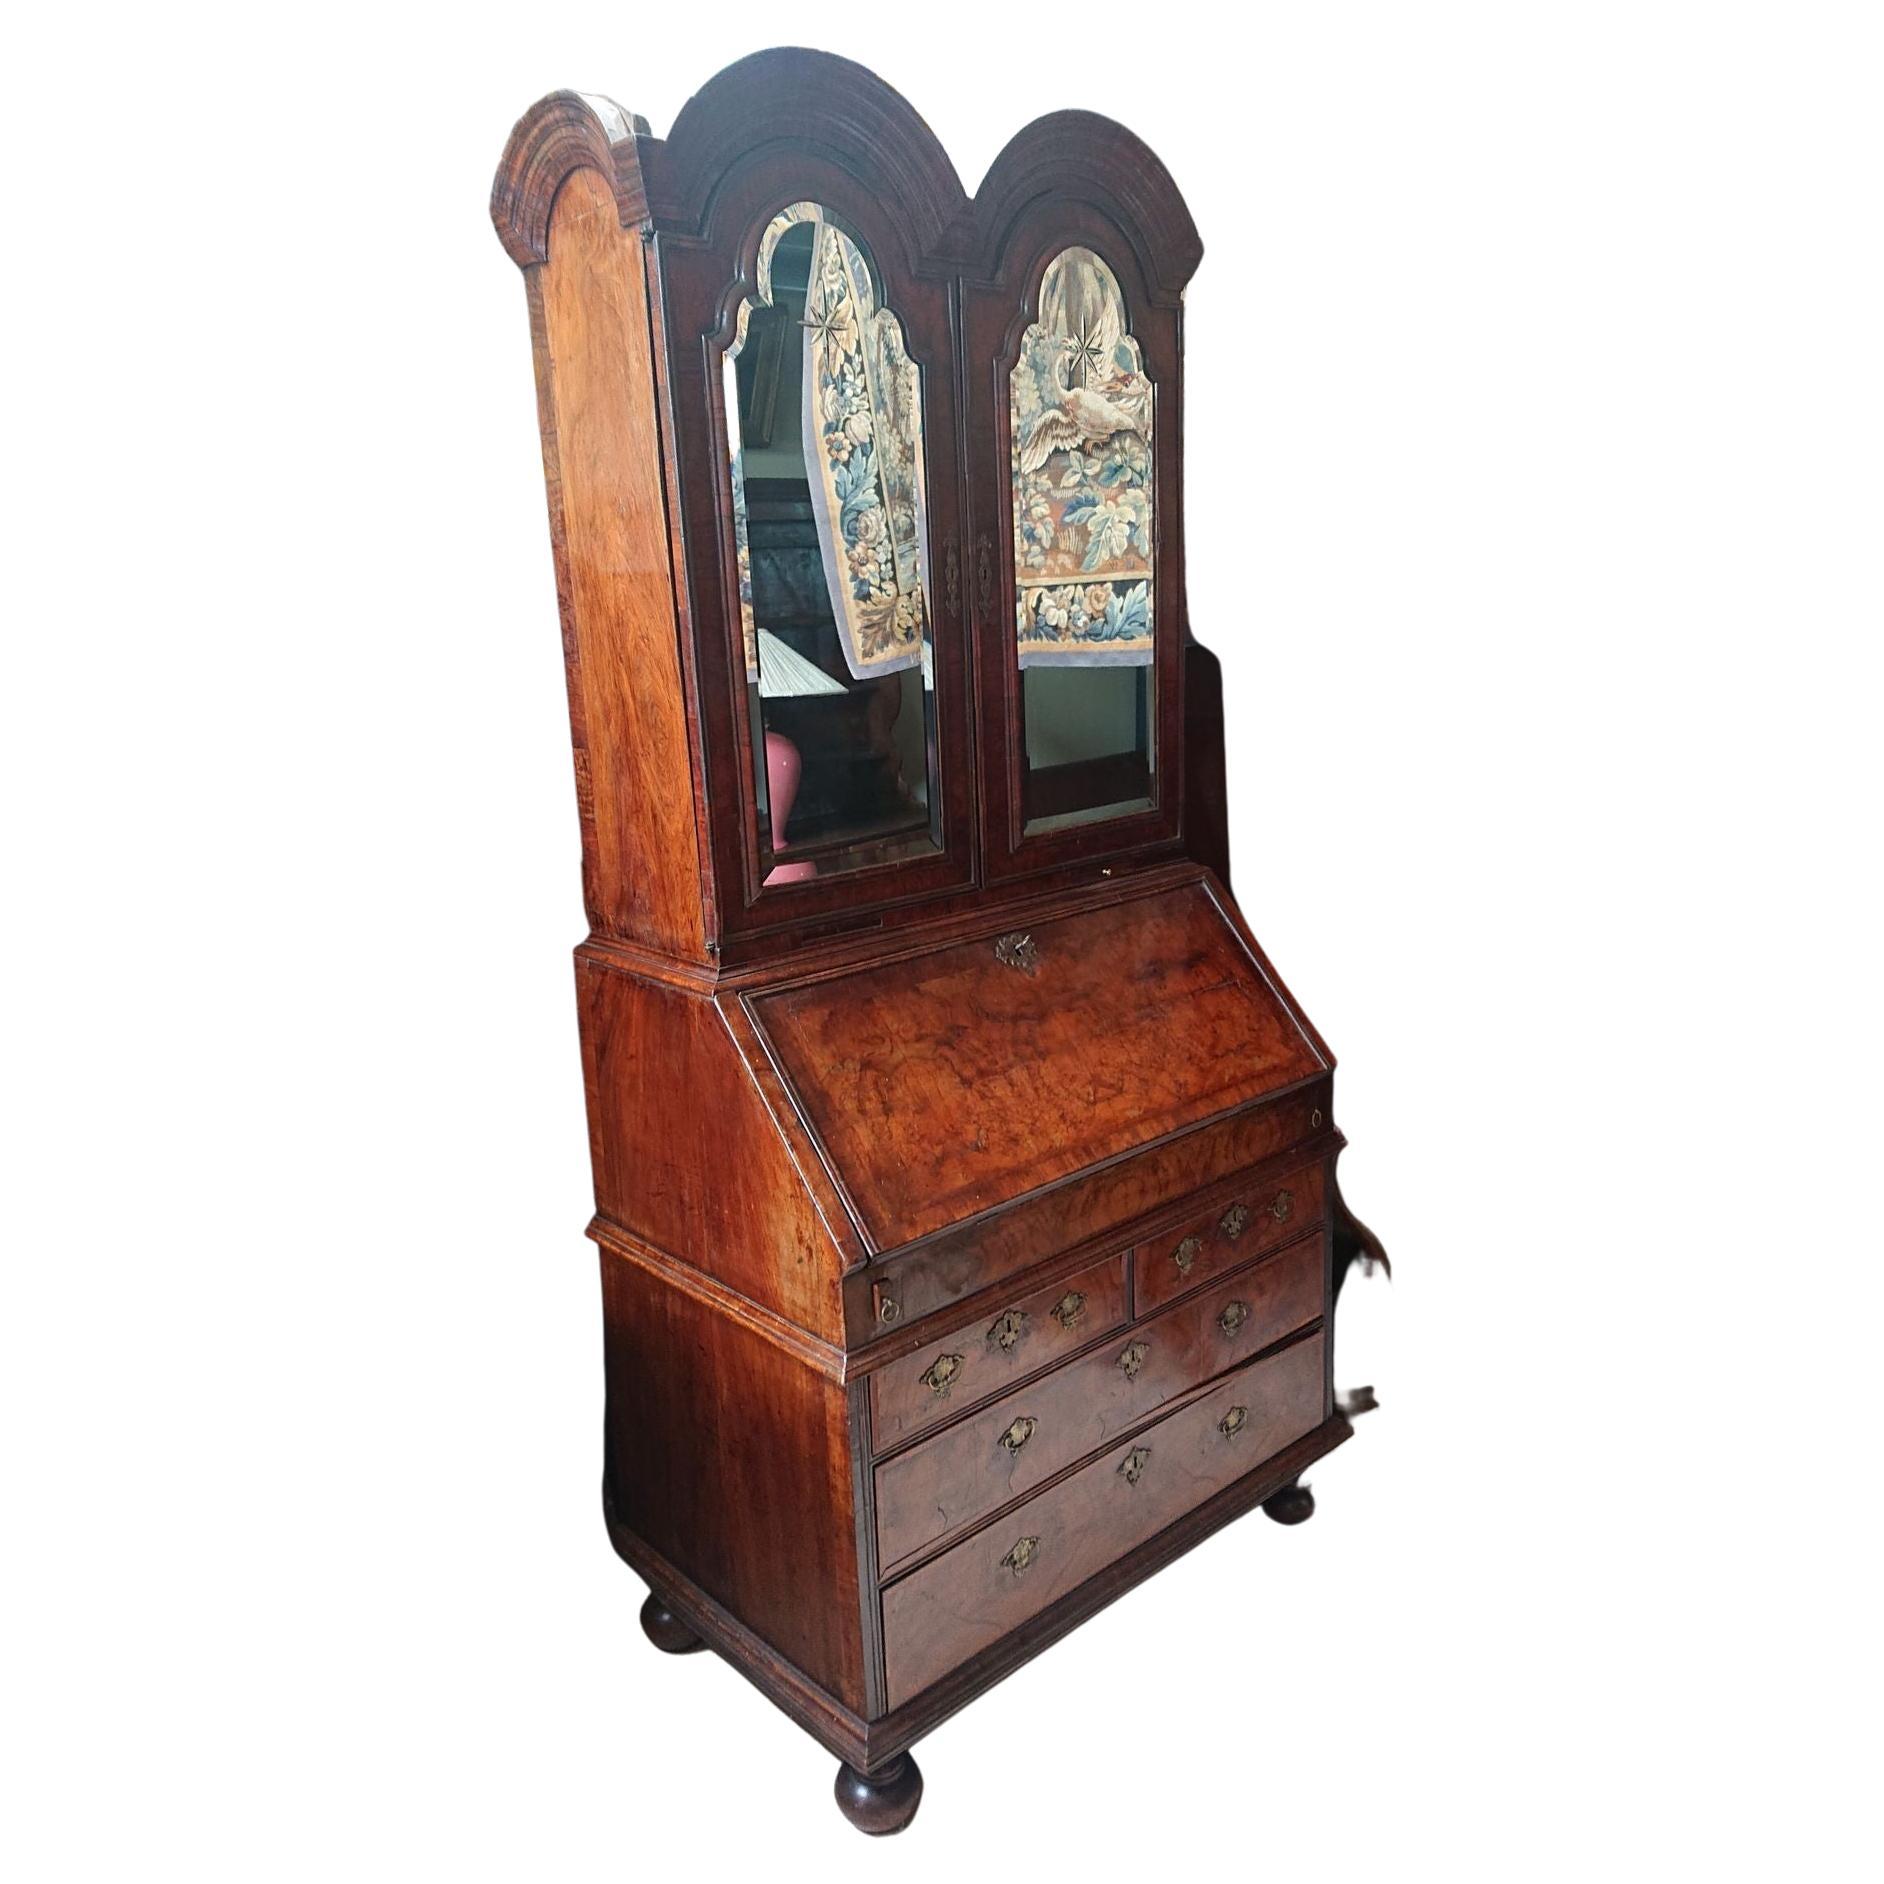 Early 18thC George I period Antique Walnut Secretary Secretaire Bureau Bookcase For Sale